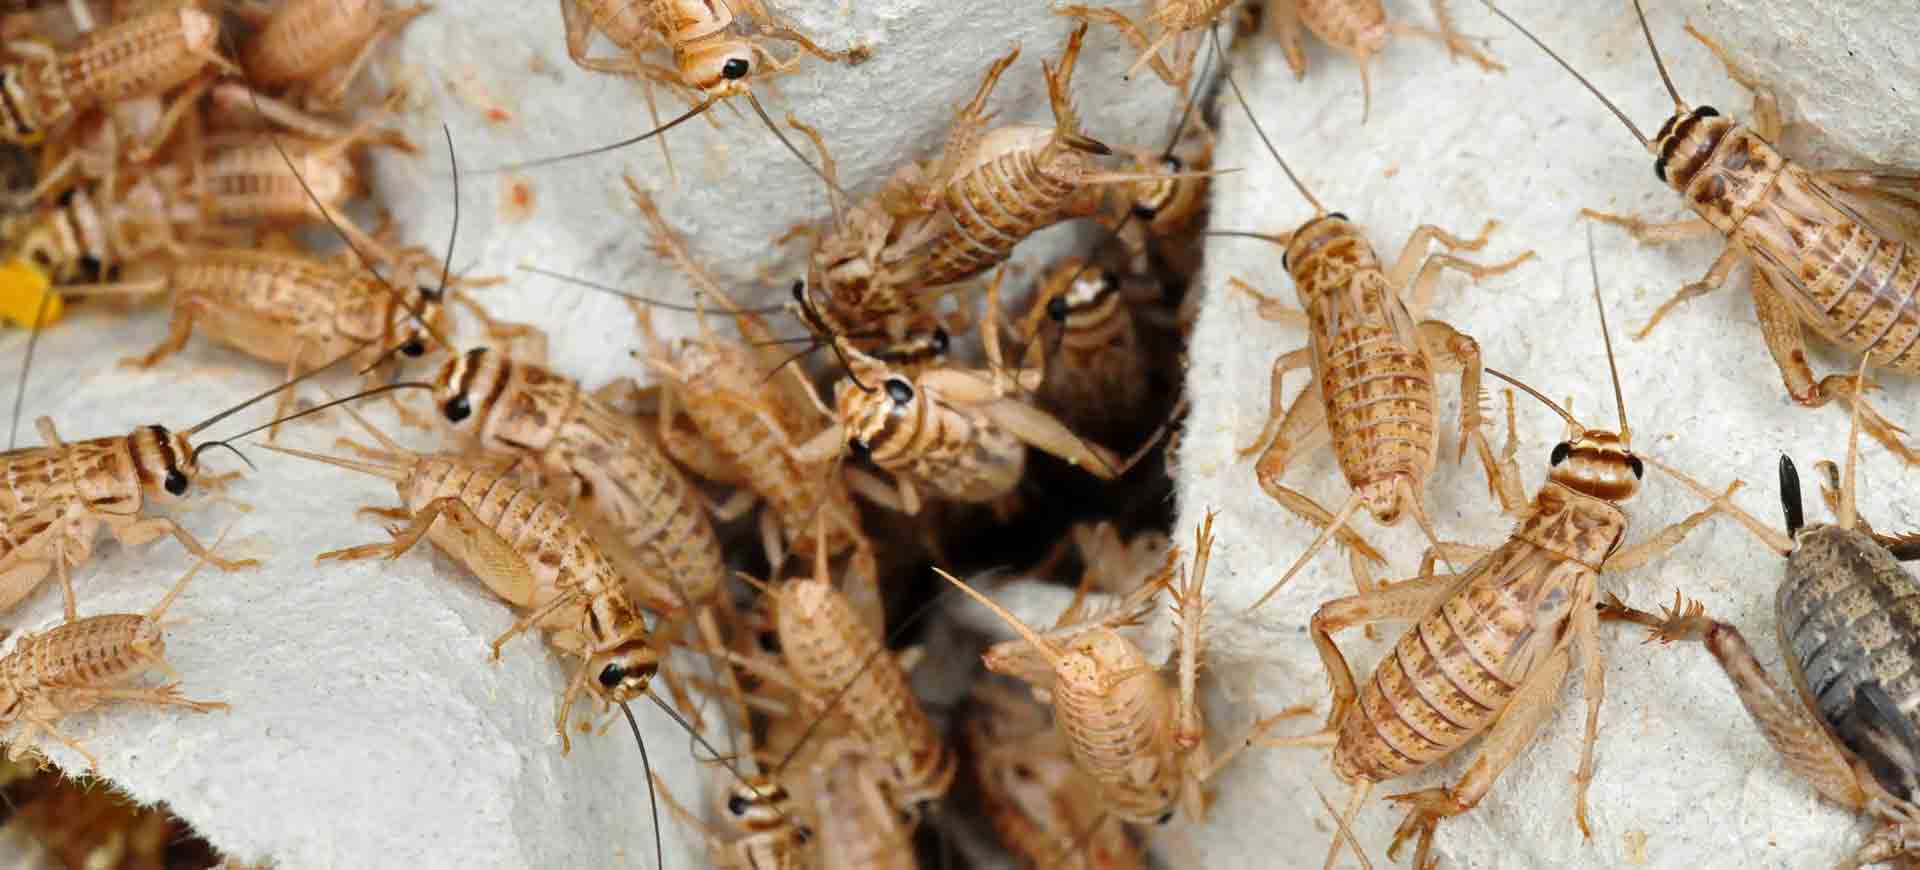 cricket pest control san ysidro